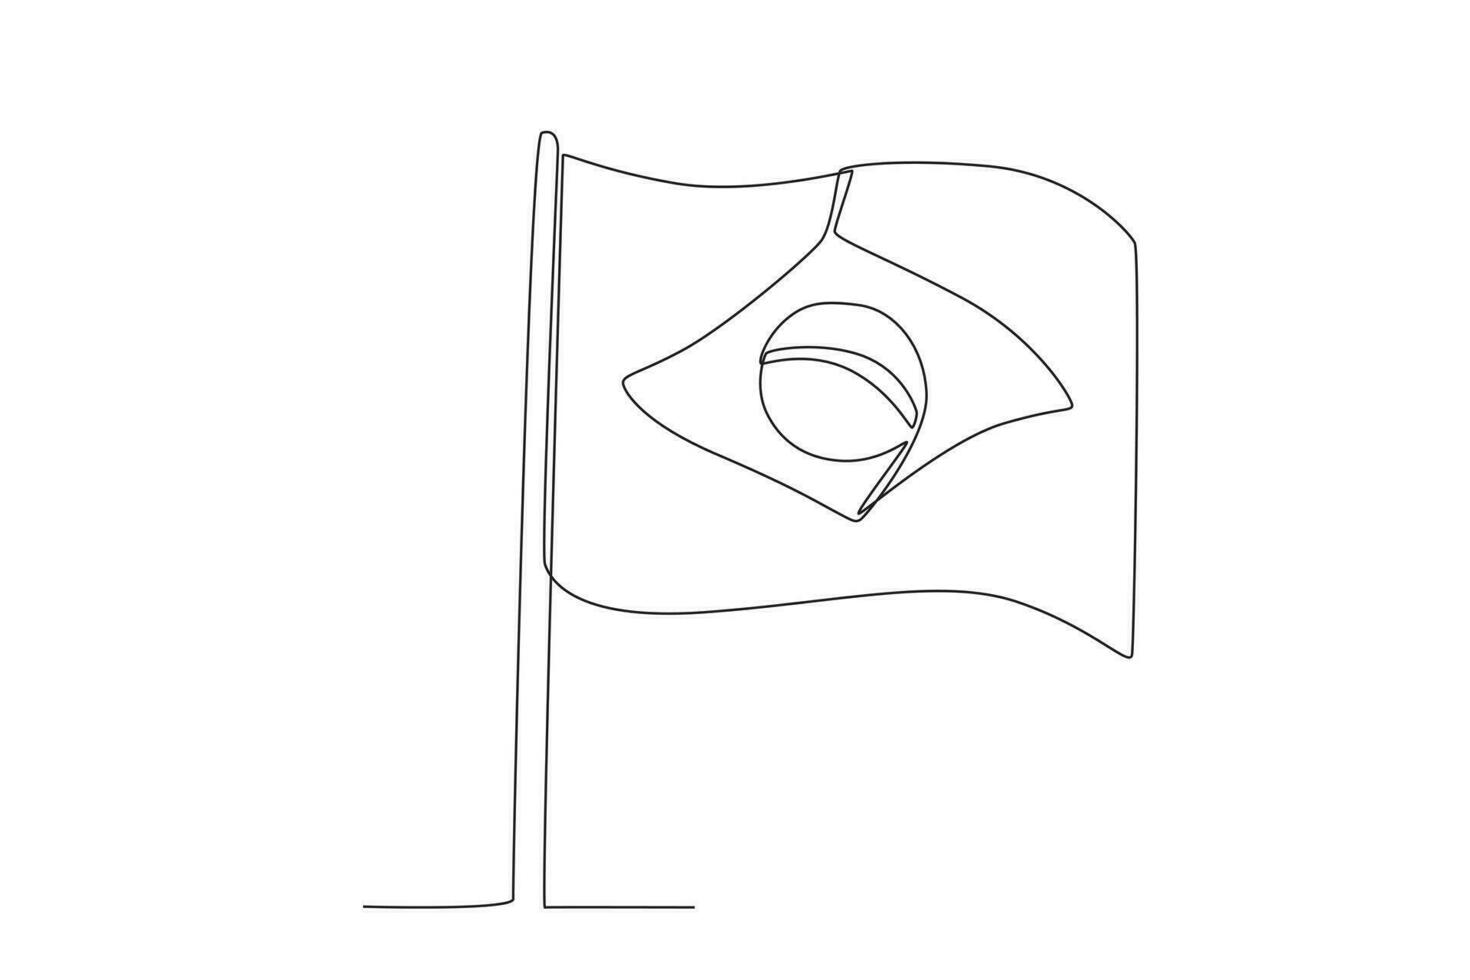 A Brazilian flag fluttered gallantly vector